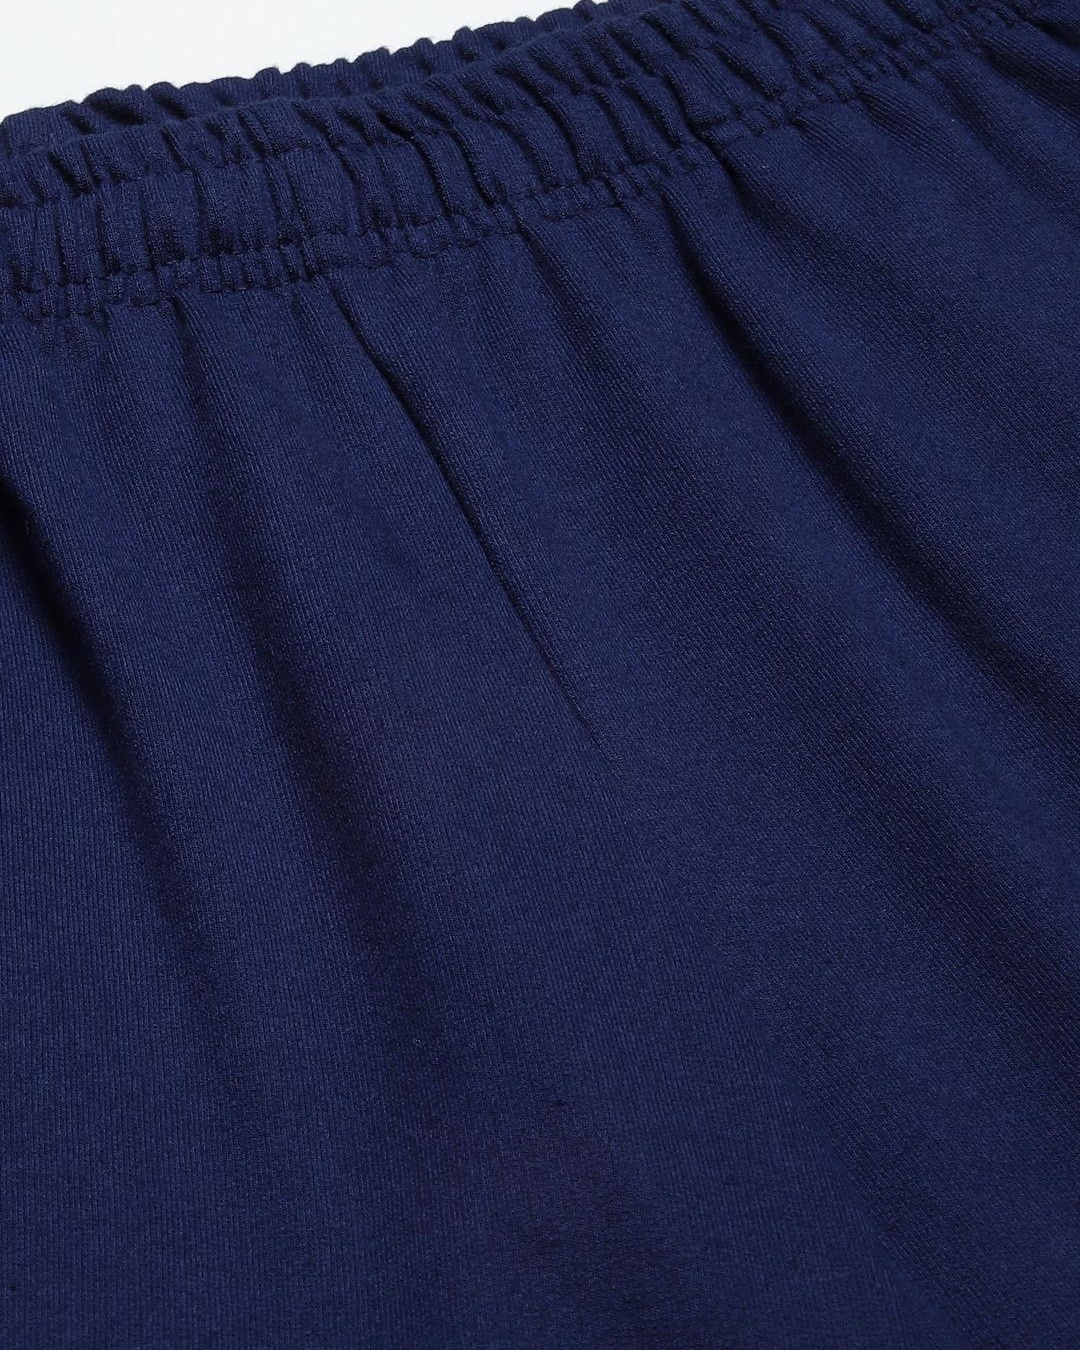 Buy Men's Blue Color Block Shorts for Men Blue Online at Bewakoof